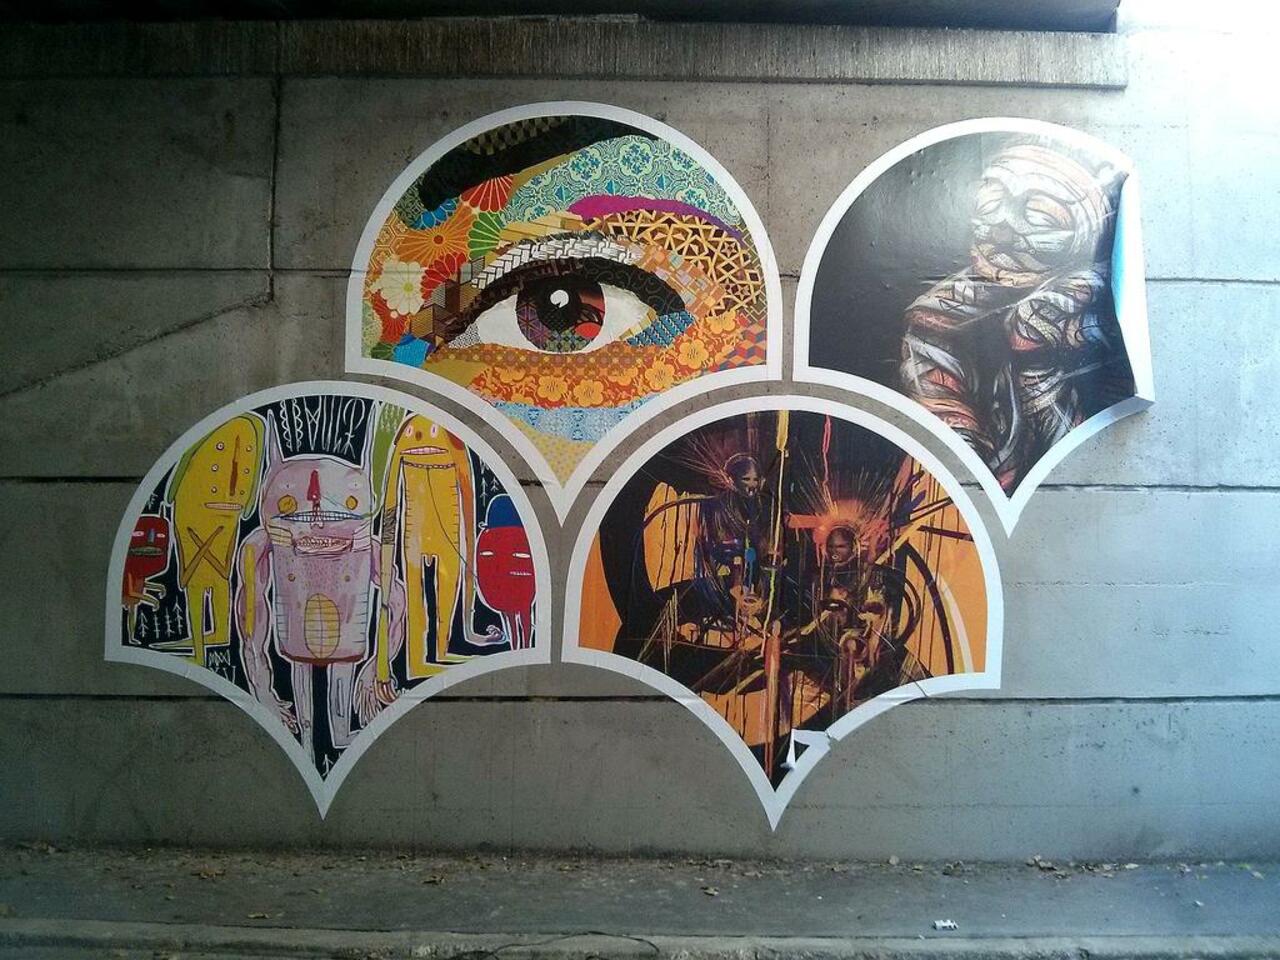 Street Art by stephane carricondo in #Paris http://www.urbacolors.com #art #mural #graffiti #streetart http://t.co/PM36o5rIck